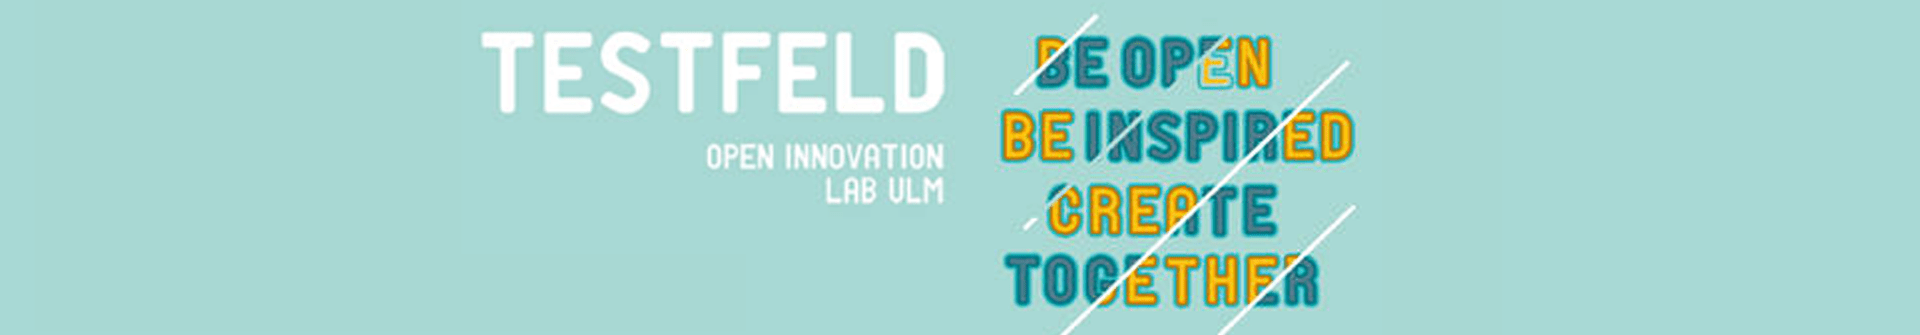 Testfeld - das Open Innovation Lab des EU-Projektes DA-SPACE